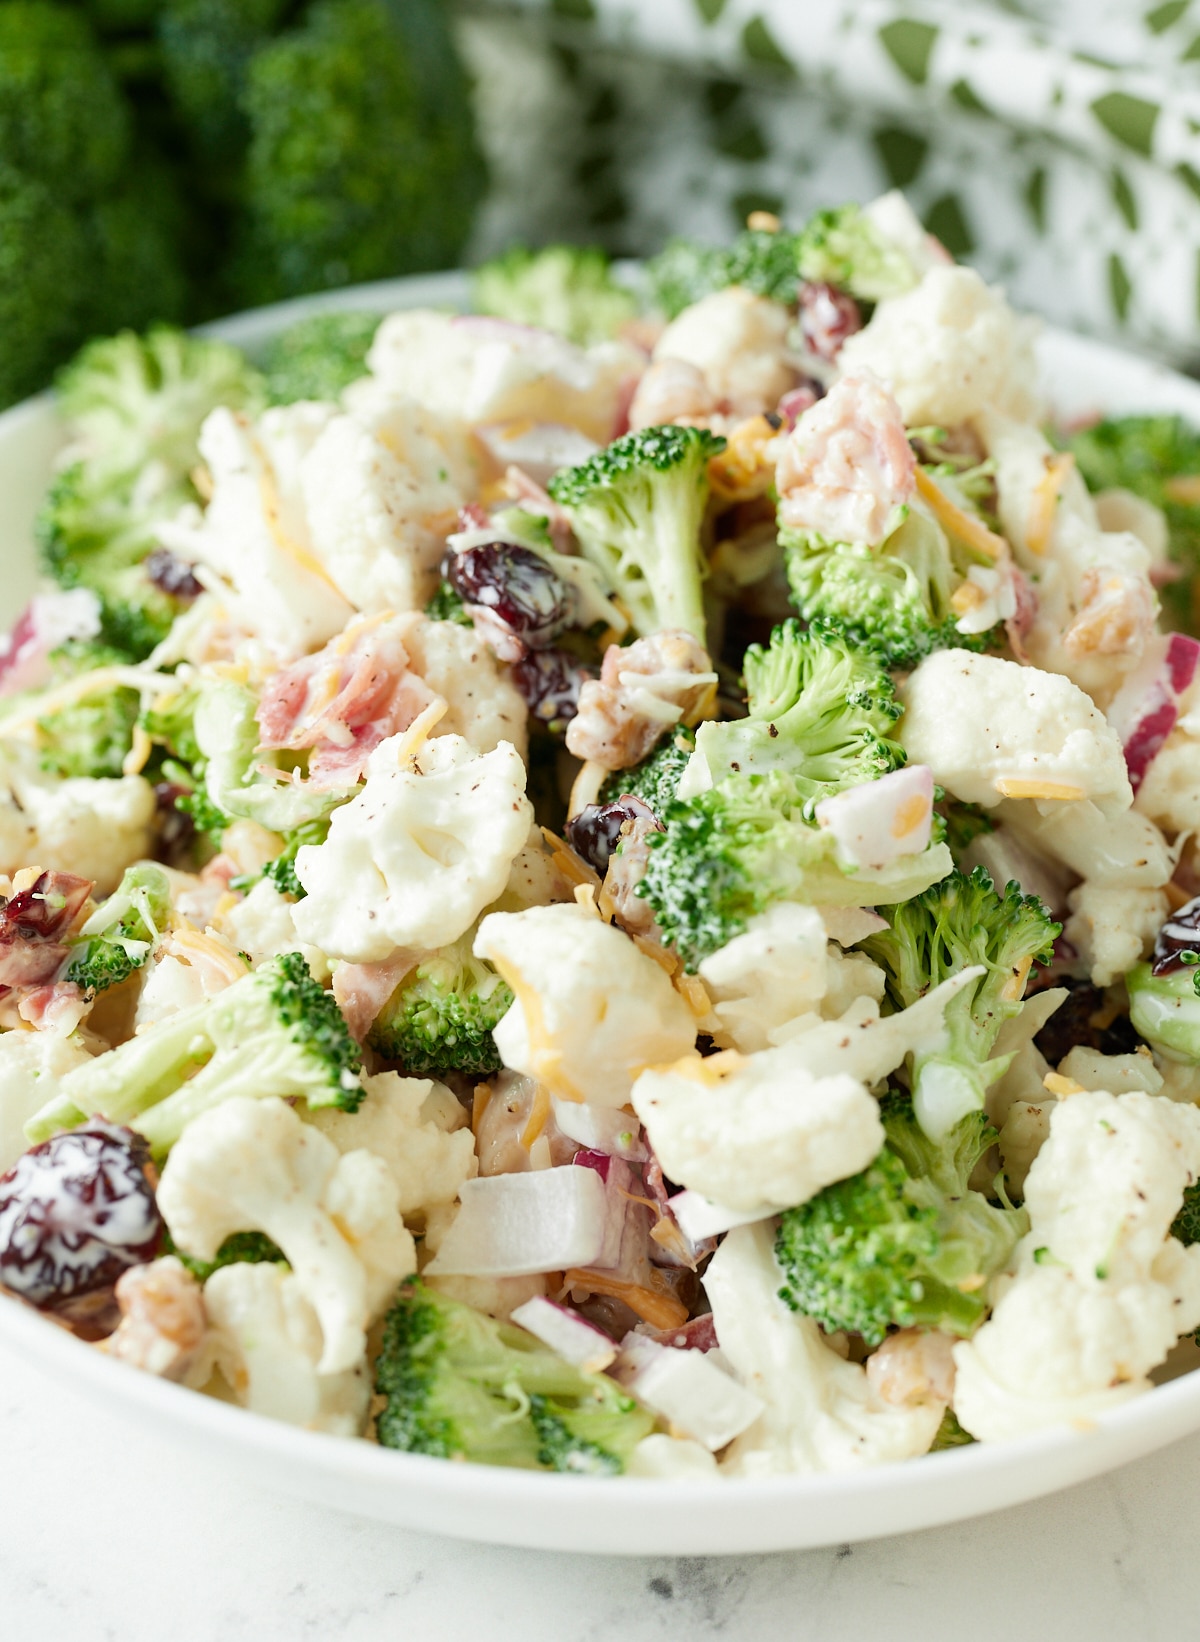 Close up of the broccoli and cauliflower salad.